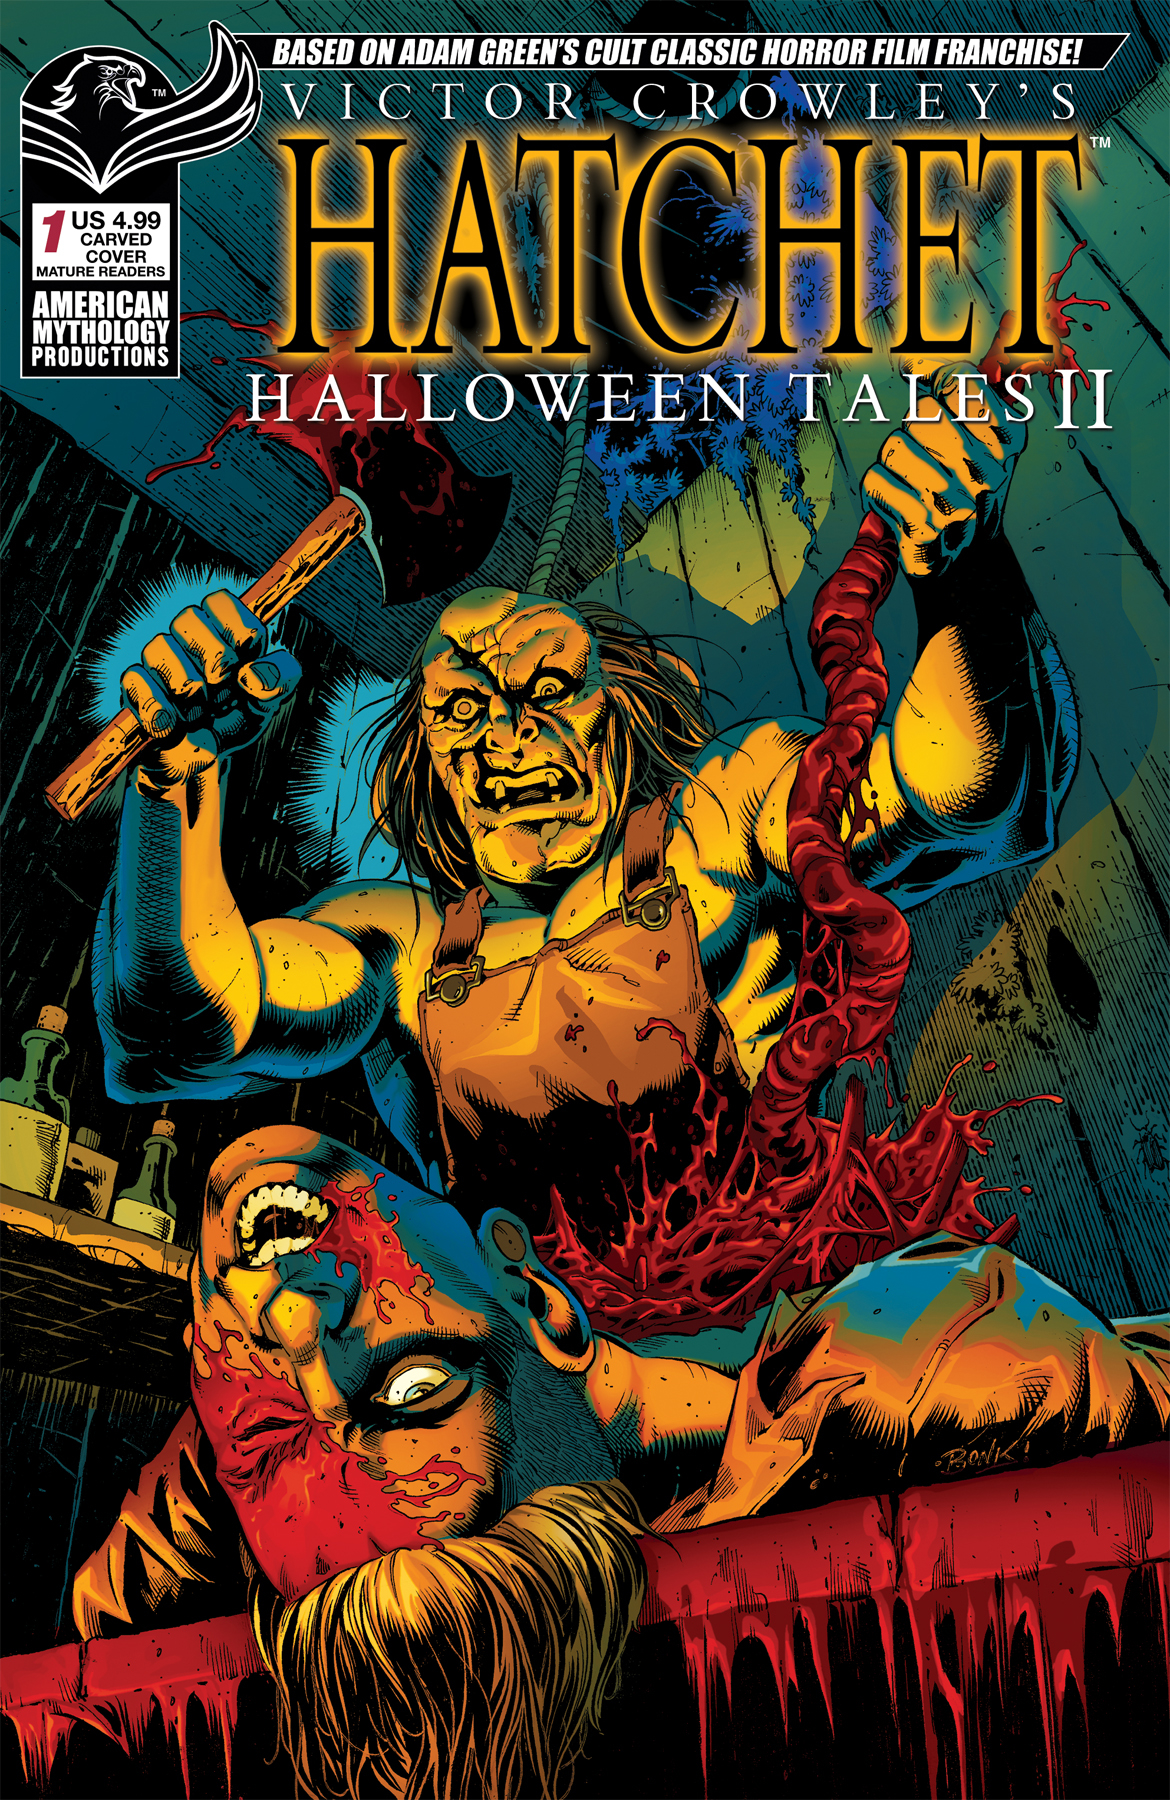 Victor Crowley Hatchet Halloween Tales II #1 Cover B Carved Bonk (Mature)